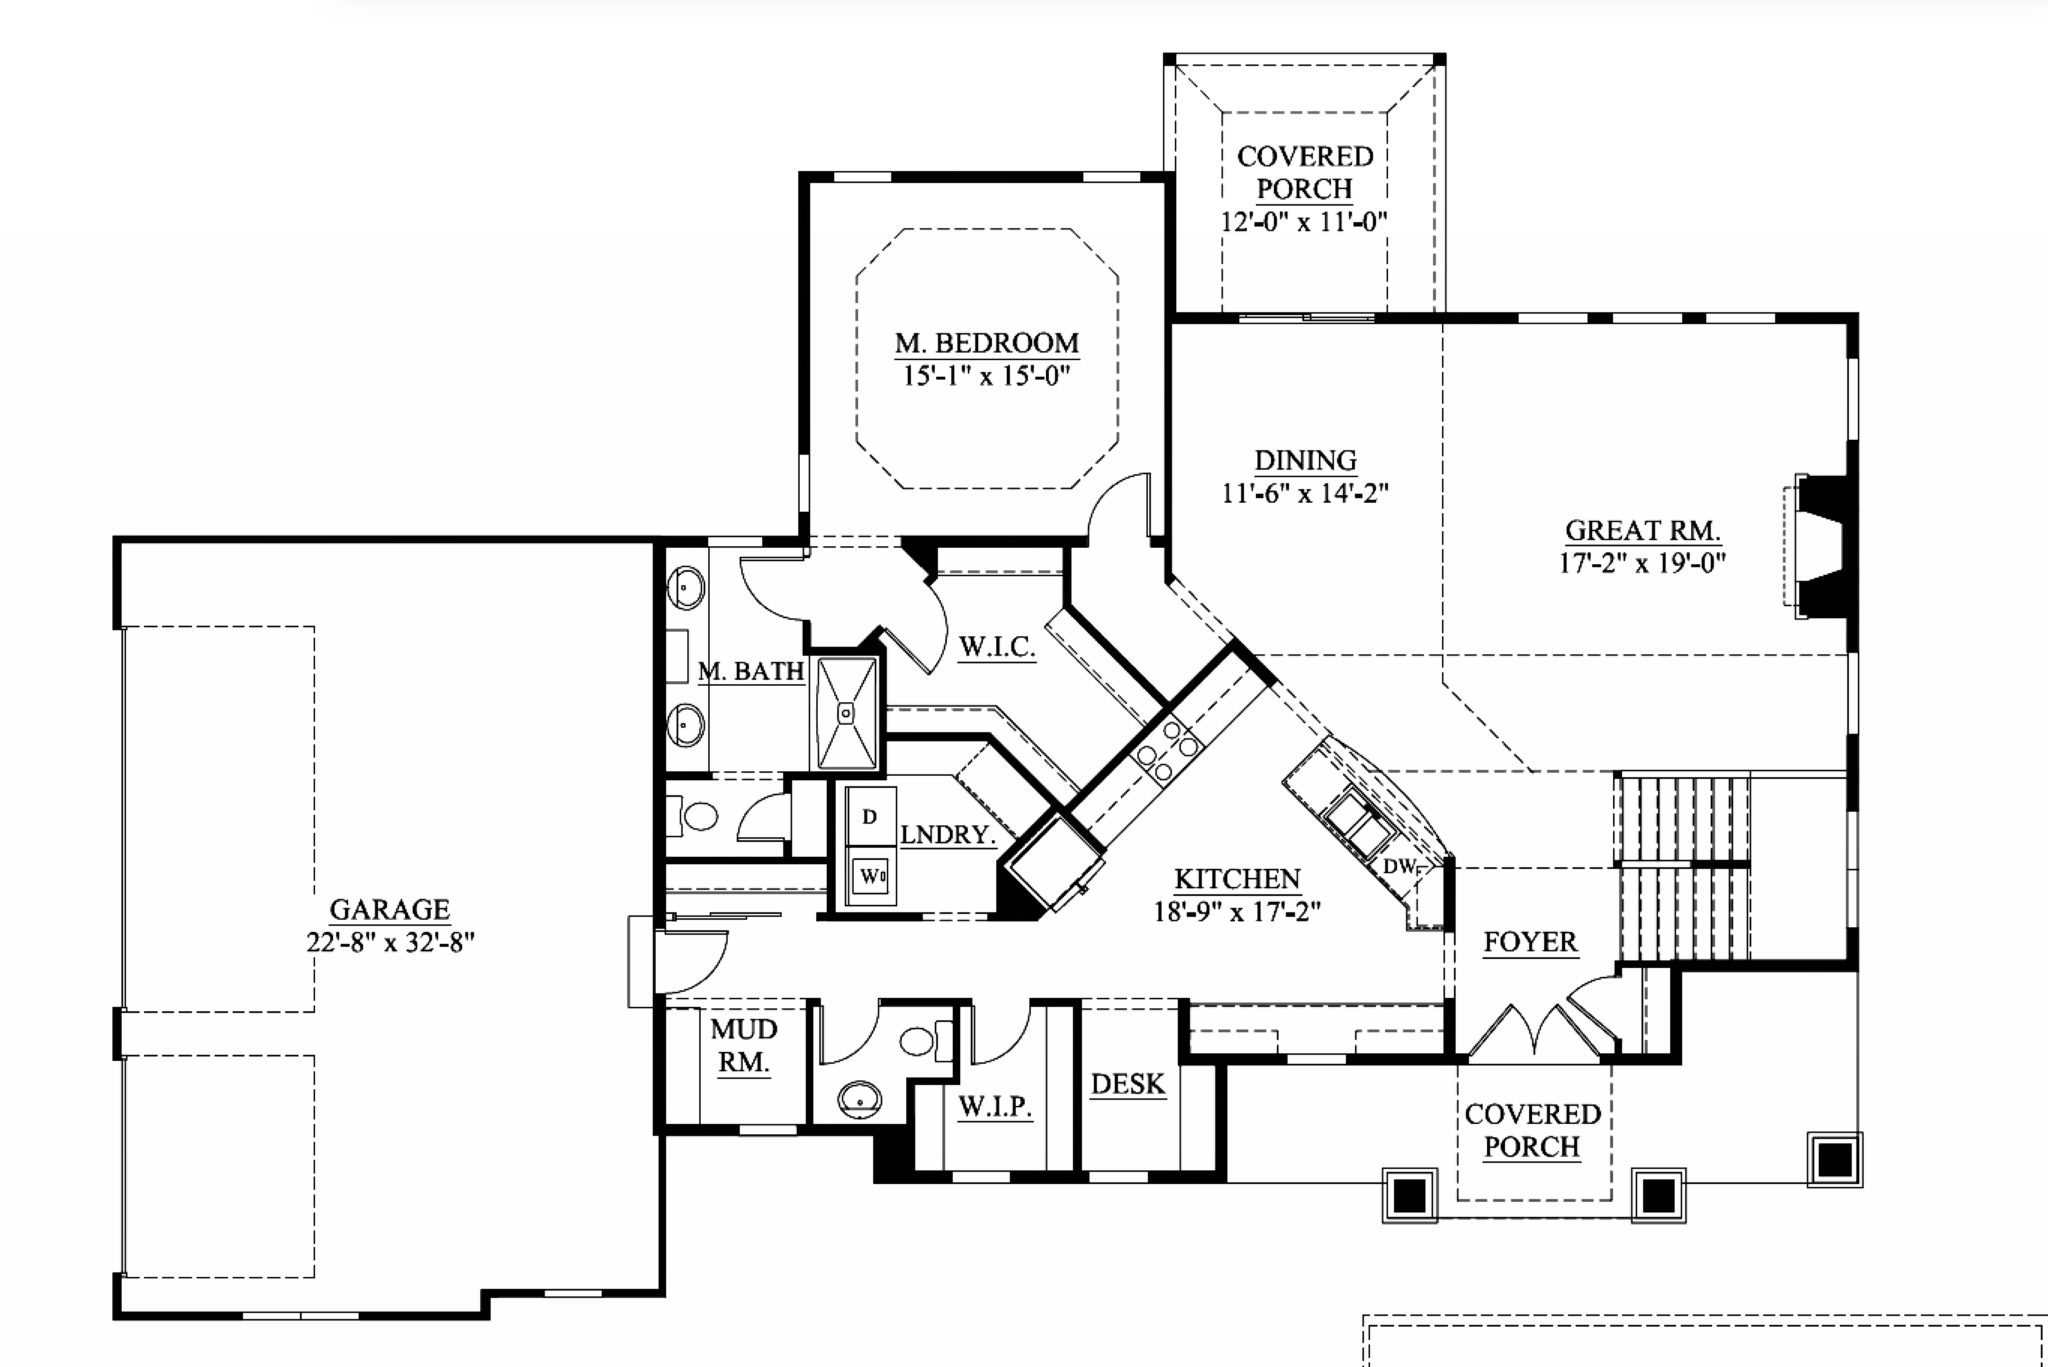 The Courtlynn first floor plan